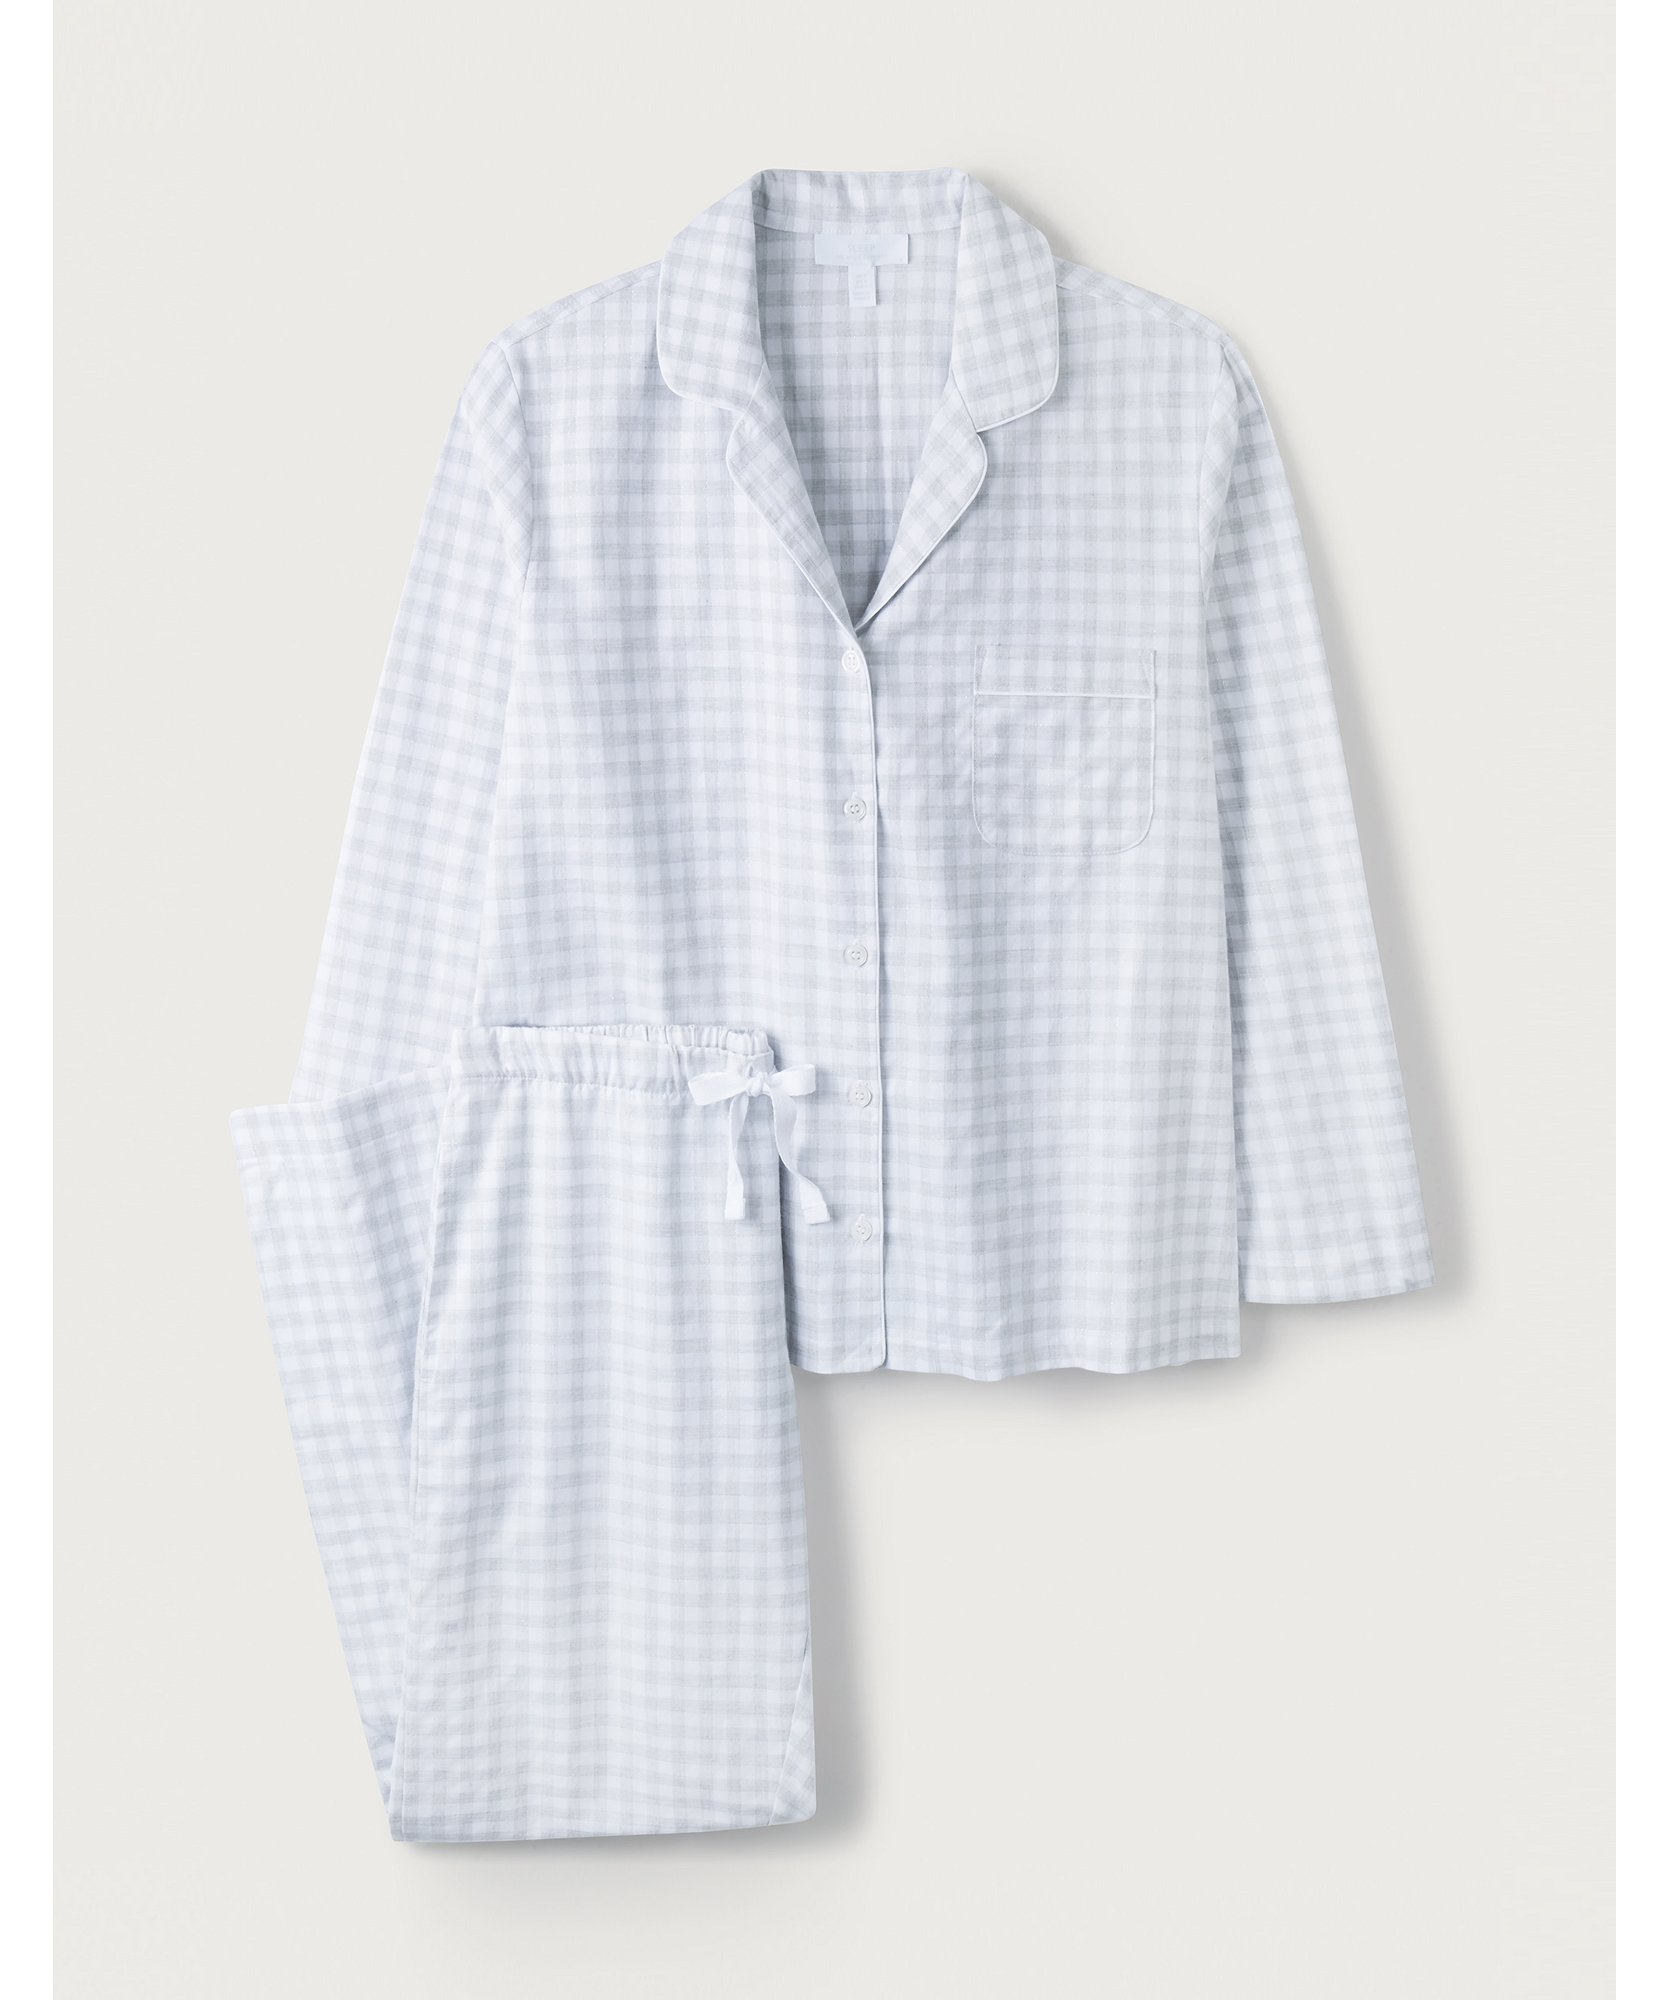 Brushed-Cotton Sparkle Check Pajama Set | Sleepwear Sale | The White ...